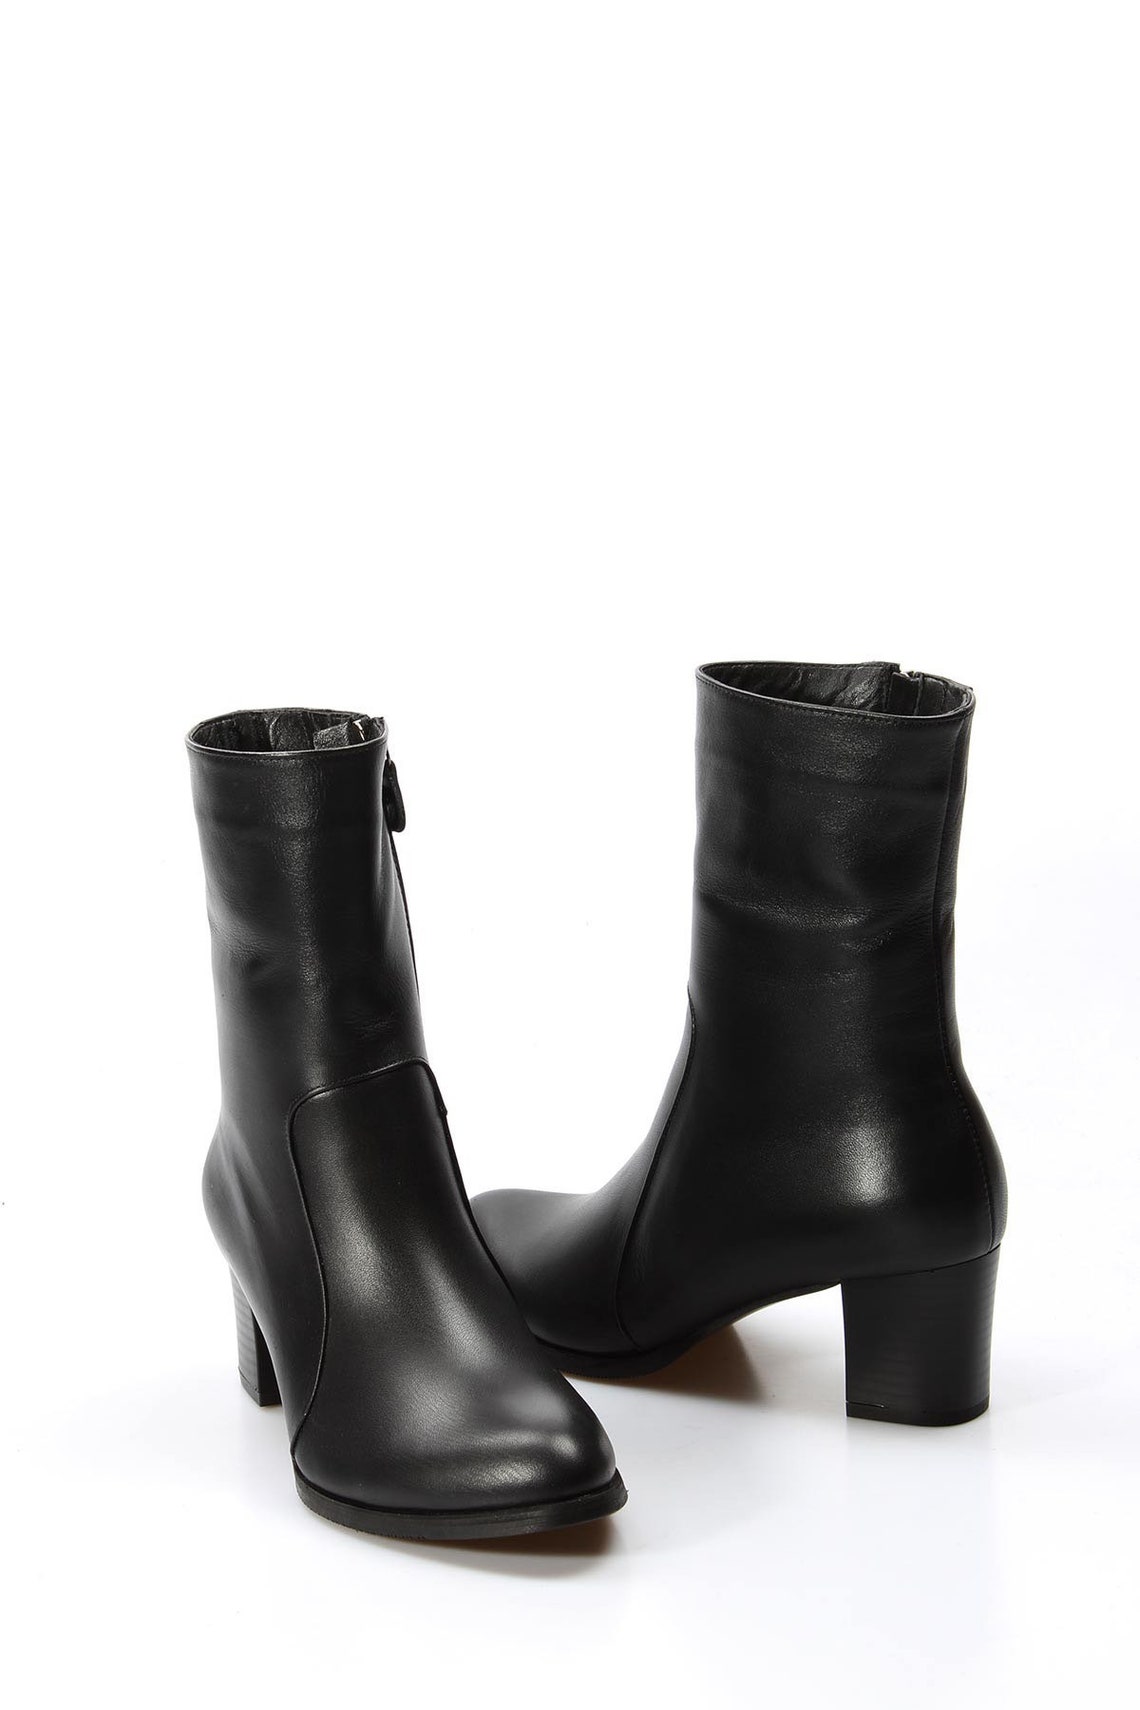 Leather Women Black Bootsblack Shoesbootiesheeled Boots - Etsy